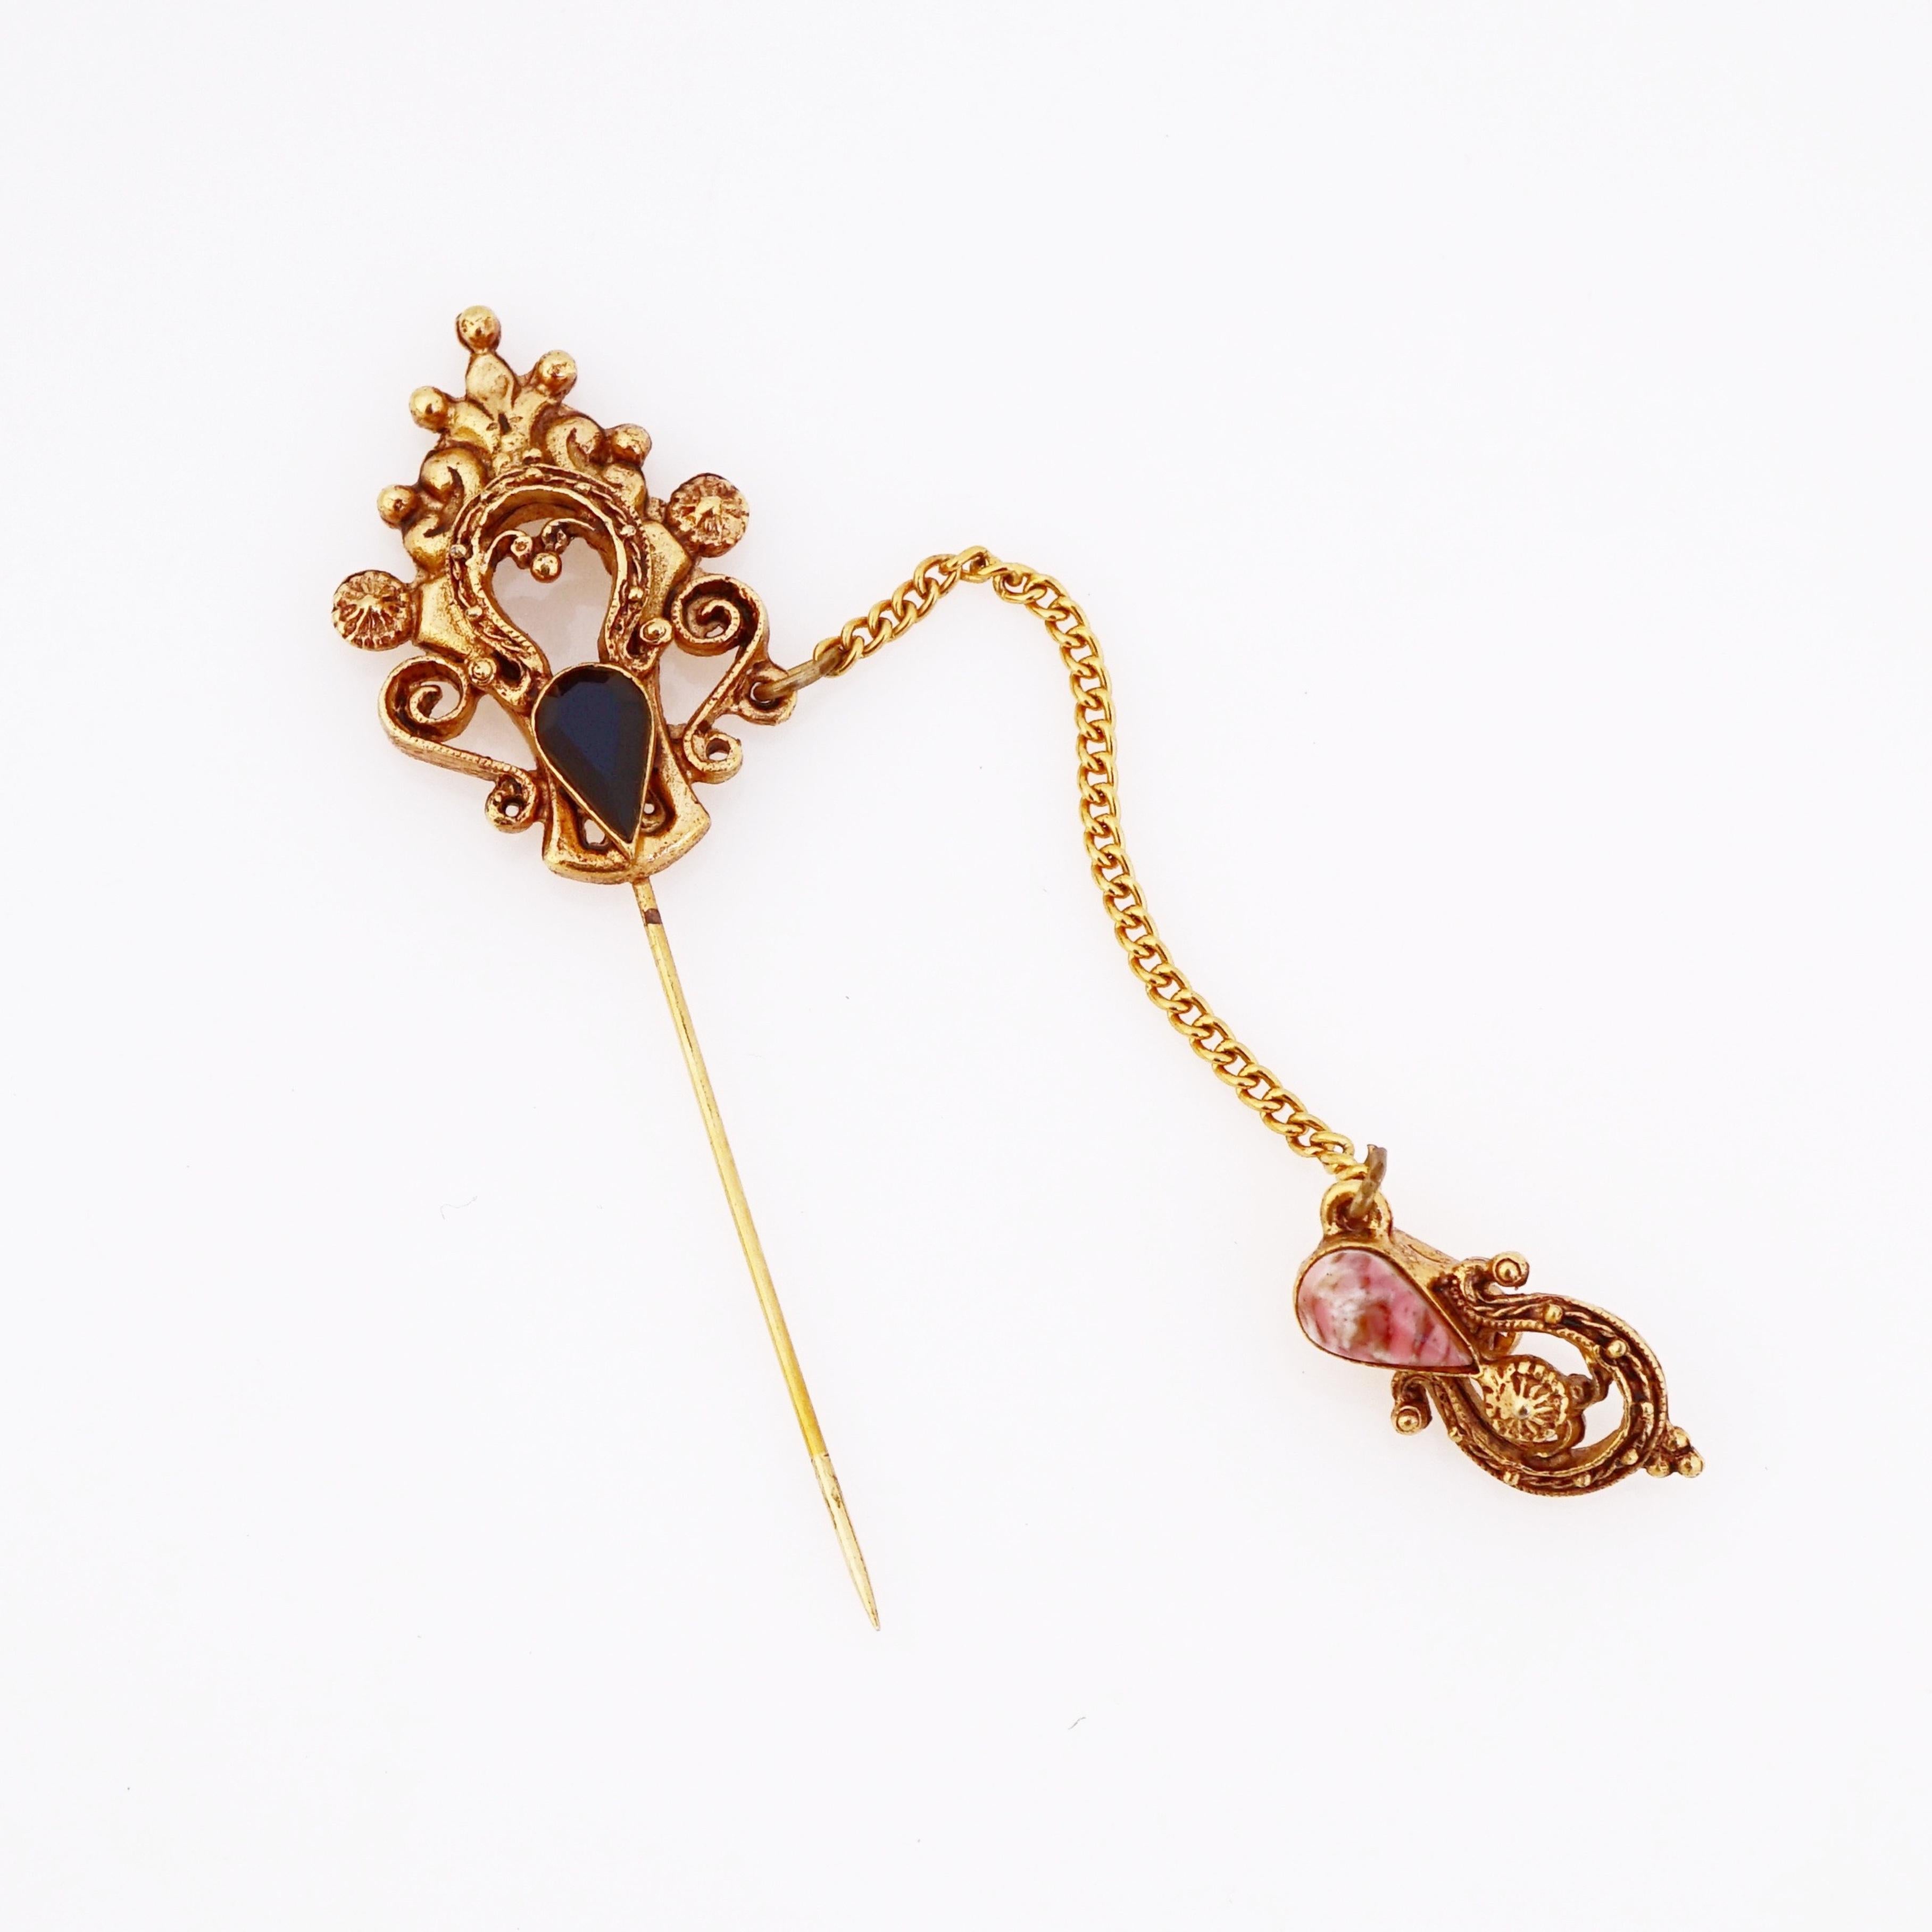 Modern Ornate Victorian Revival Gemstone Stick Pin By Florenza, 1960s